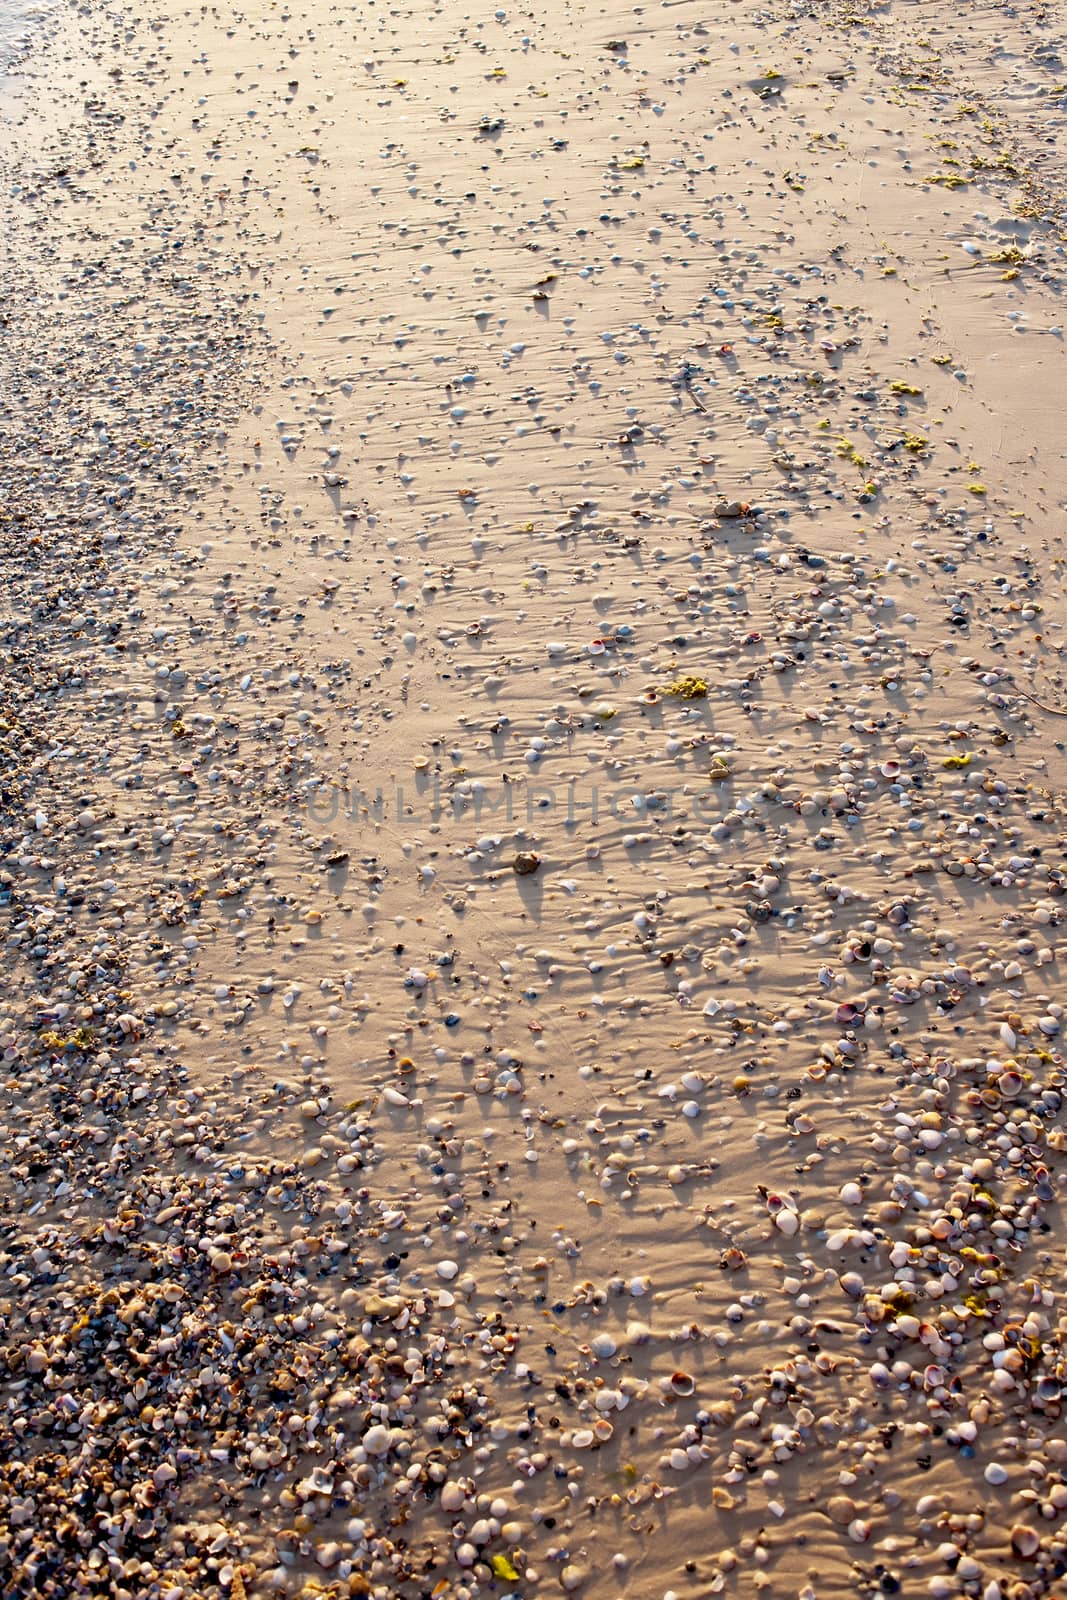 Sand and shells by Krakatuk